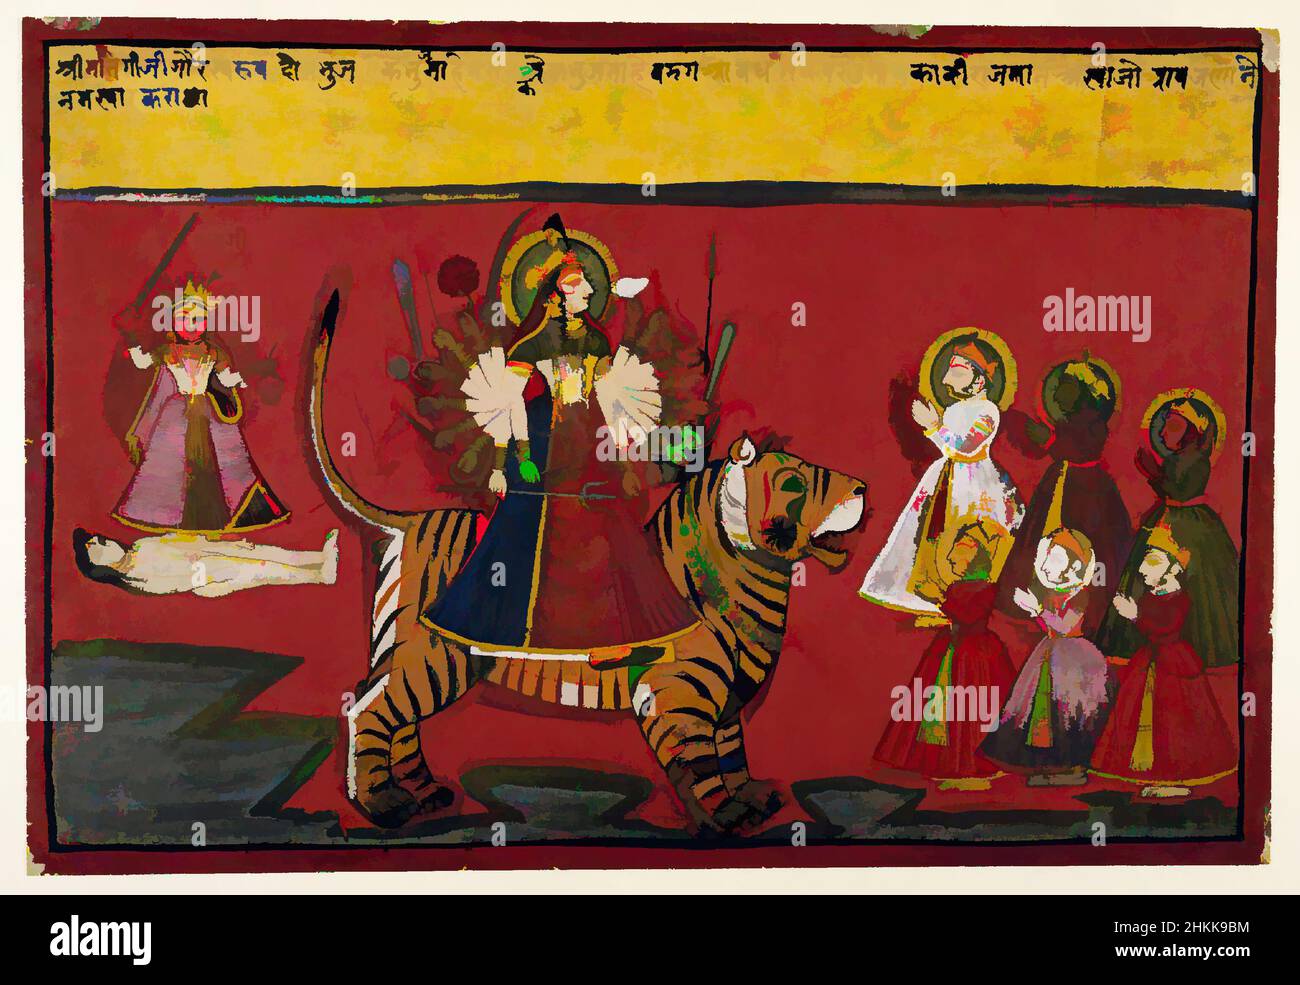 Goddess durga tiger hi-res stock photography and images - Alamy